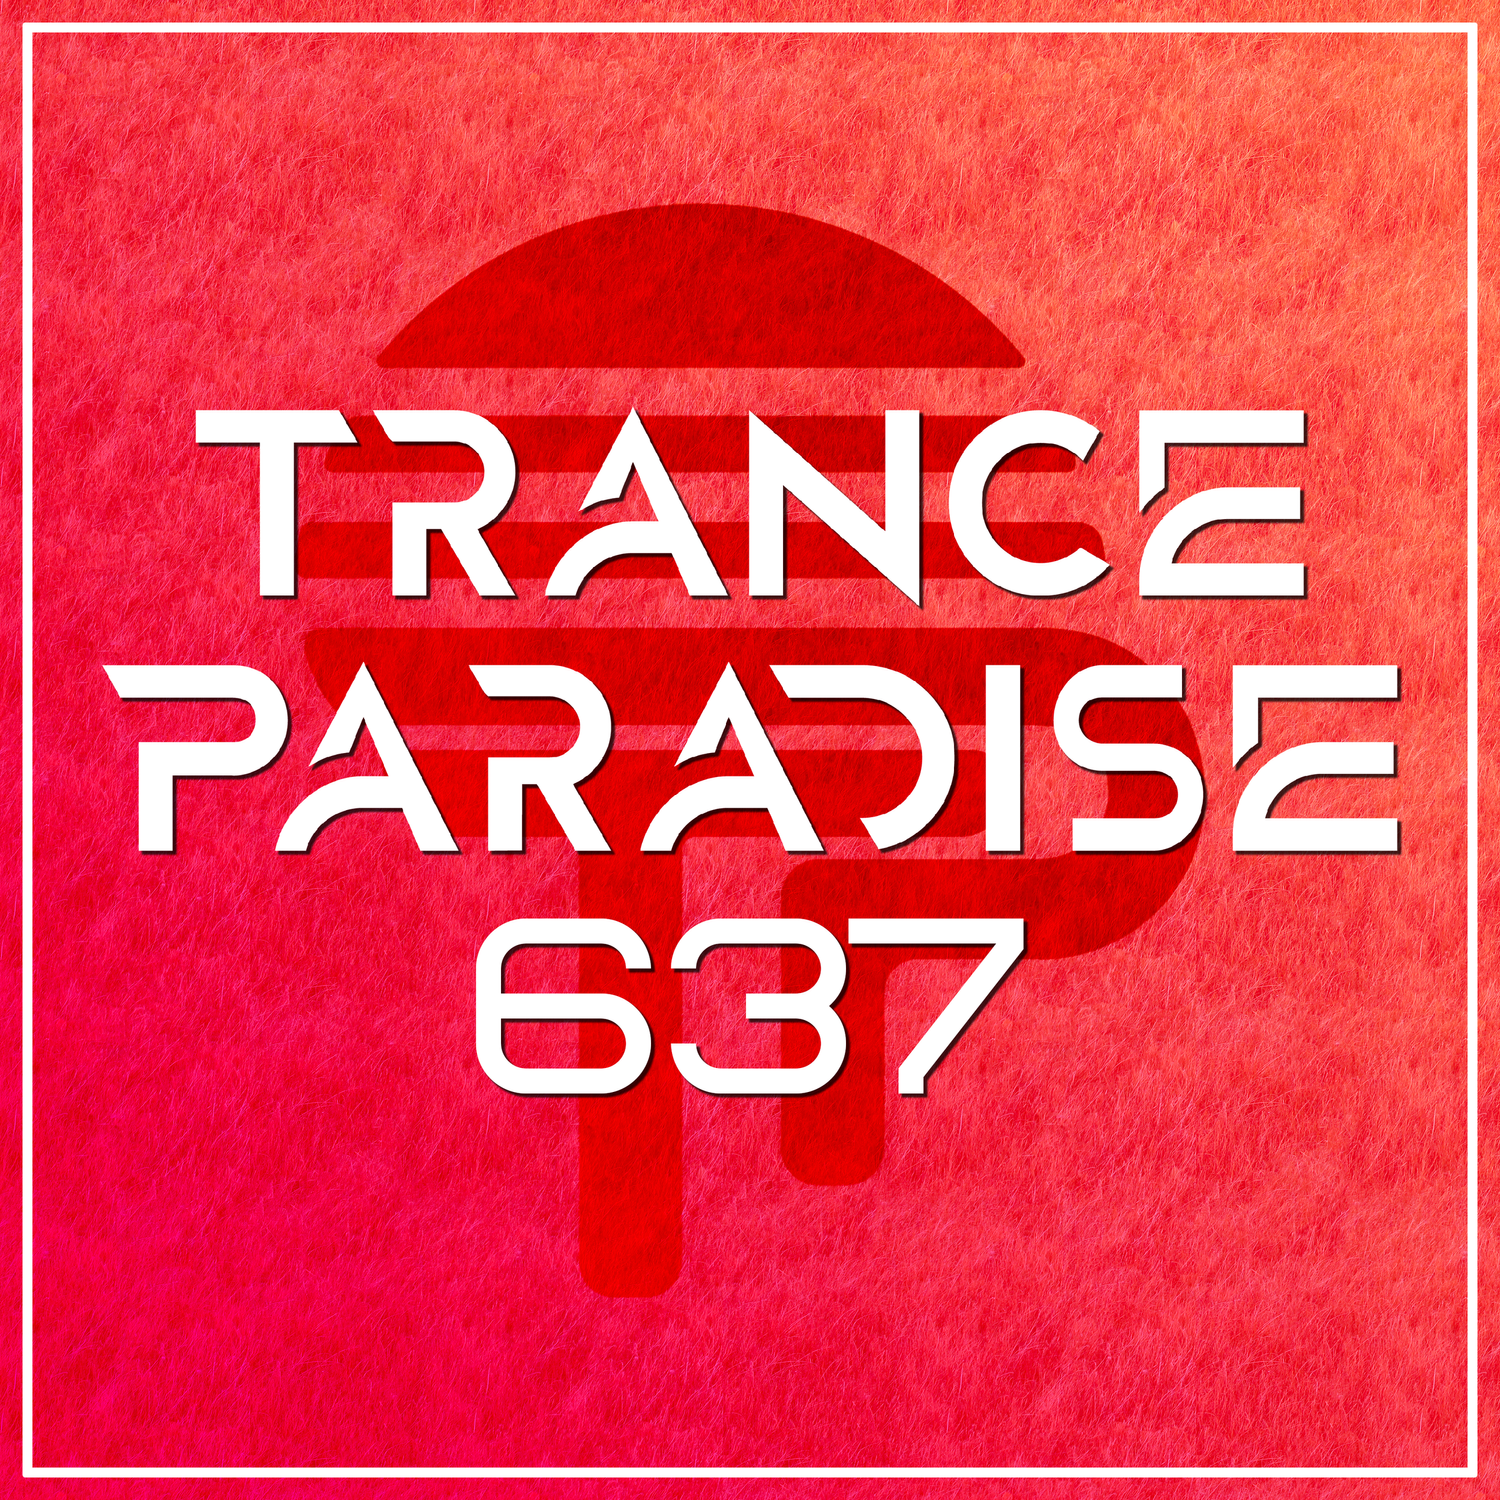 Trance Paradise 637